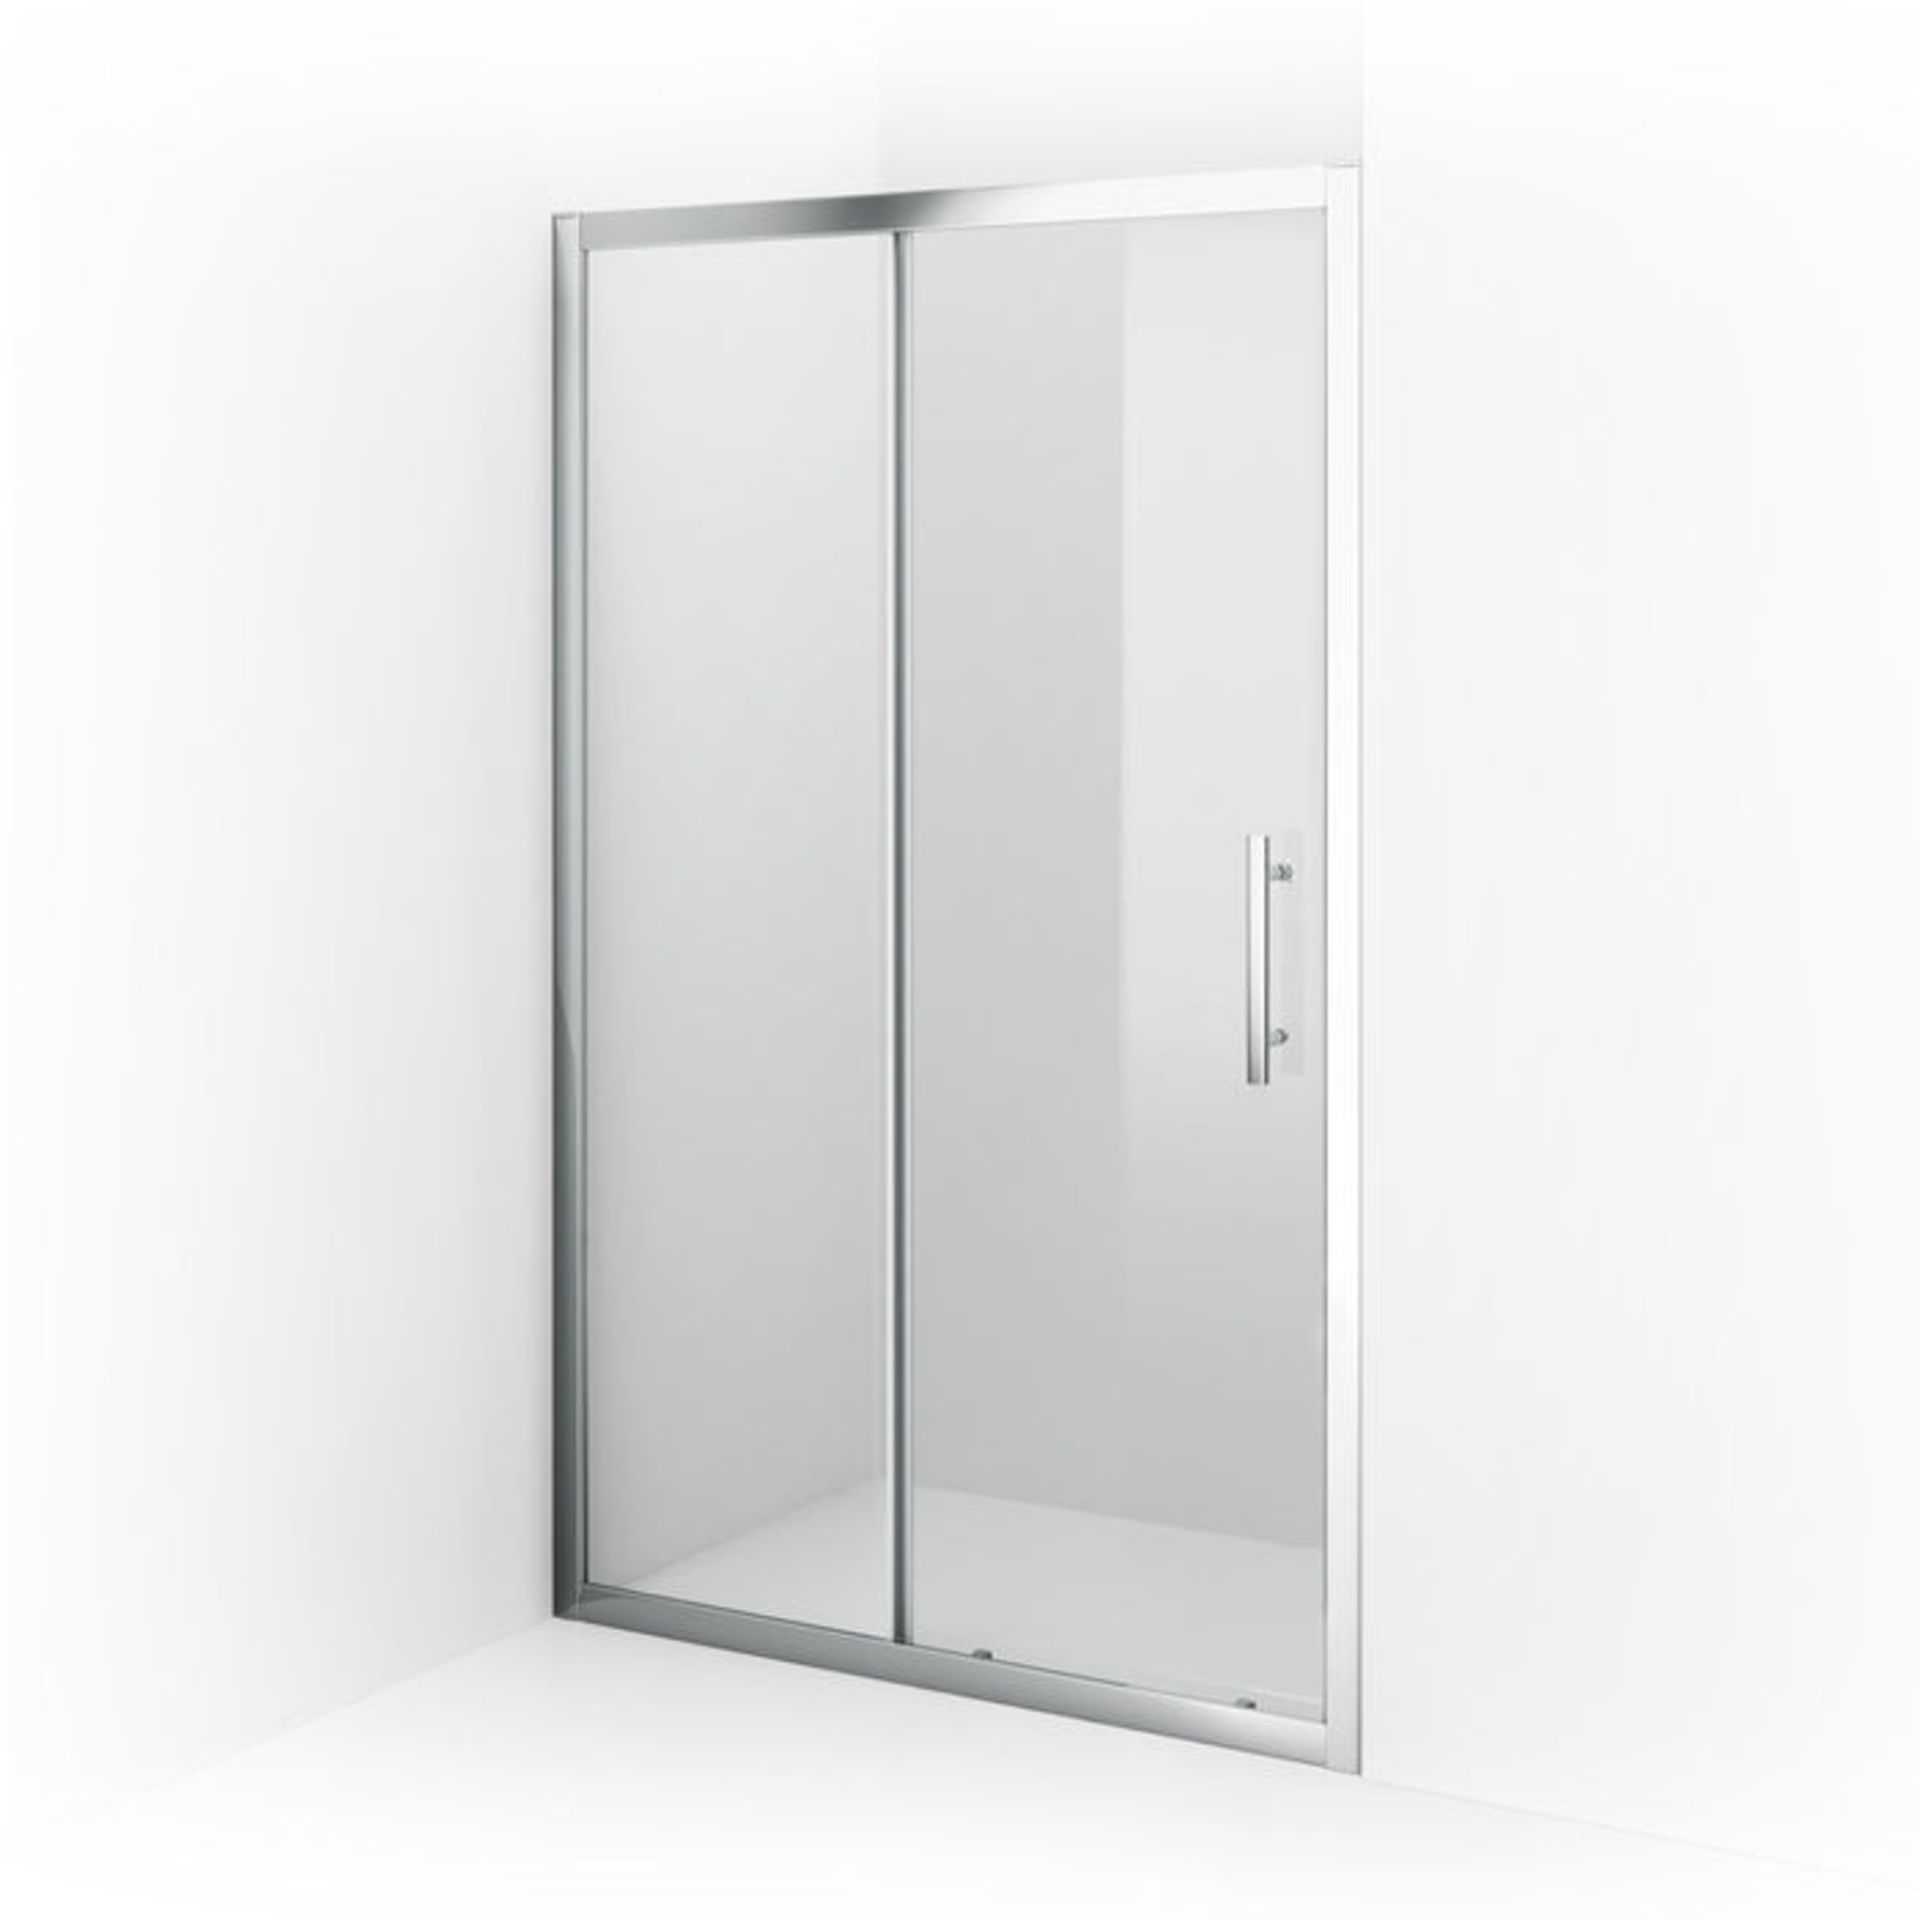 (NY189) 1400mm - 8mm - Premium EasyClean Sliding Shower Door. RRP £434.99. 8mm EasyClean glass - Our - Image 4 of 5